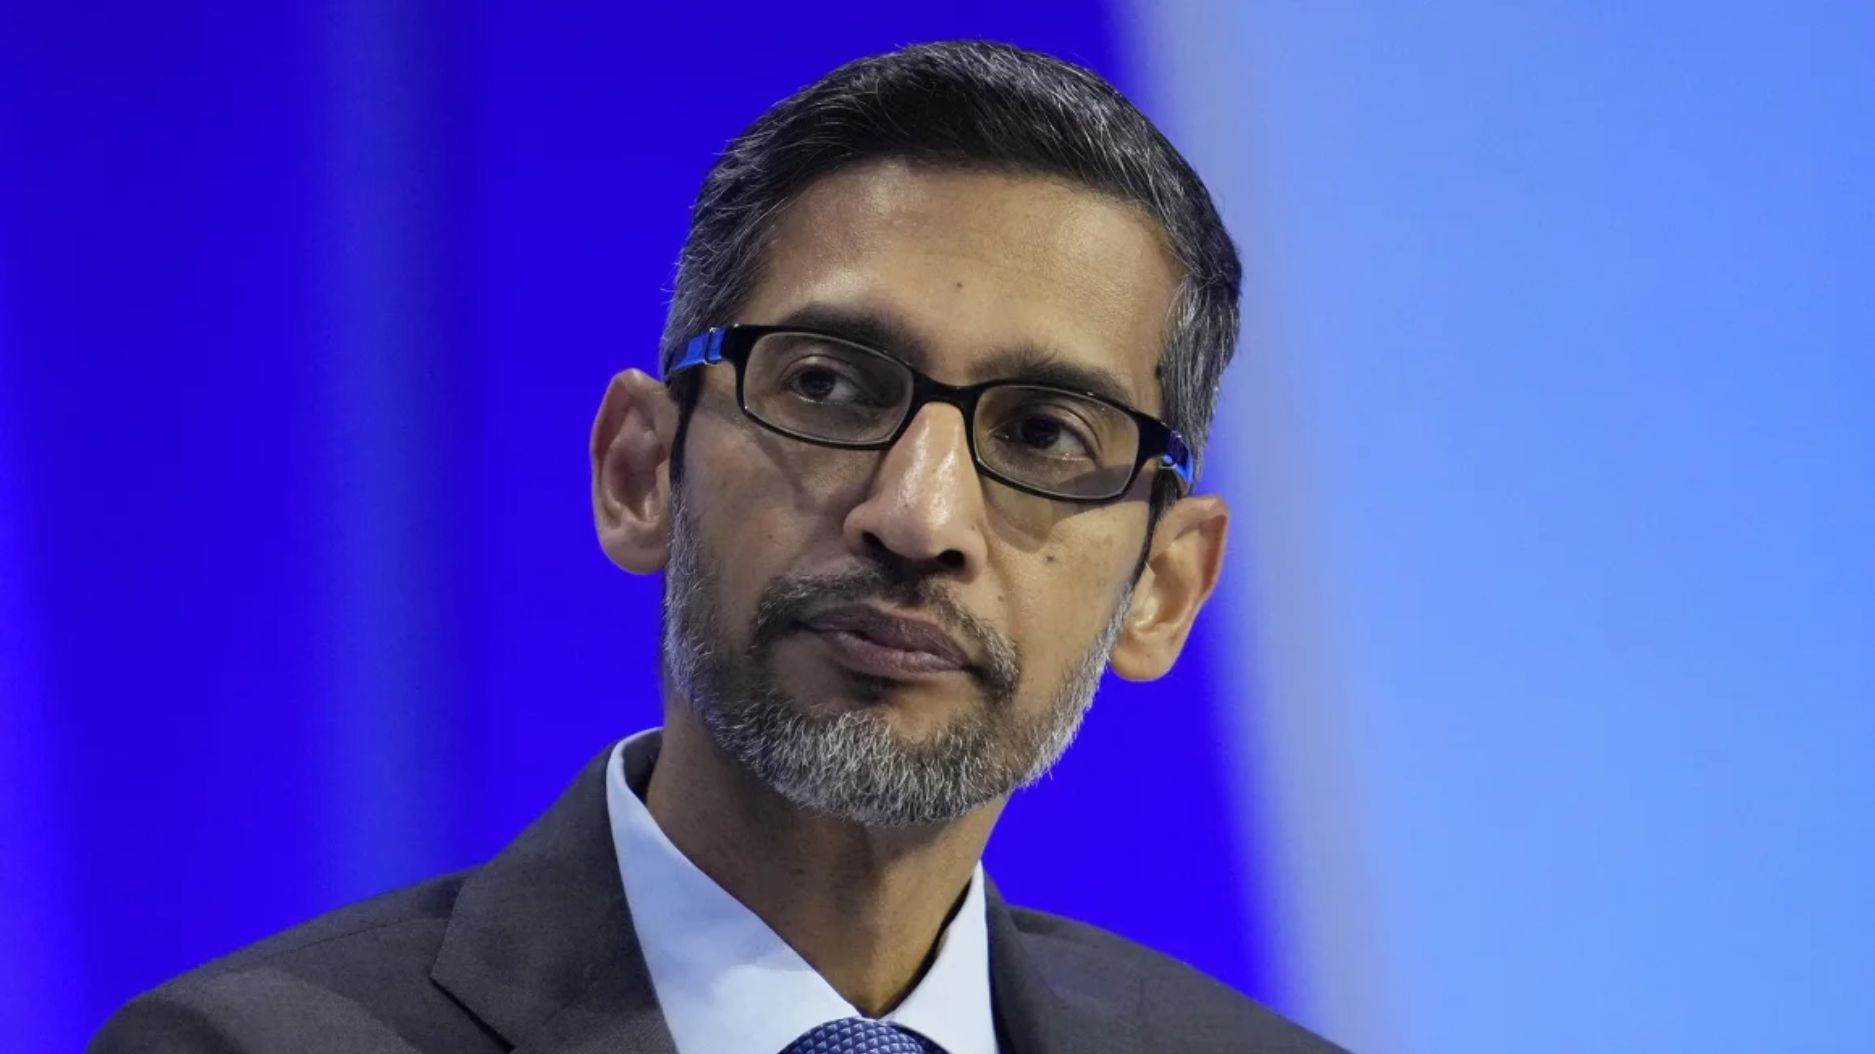 Google CEO warns of more layoffs in internal memo